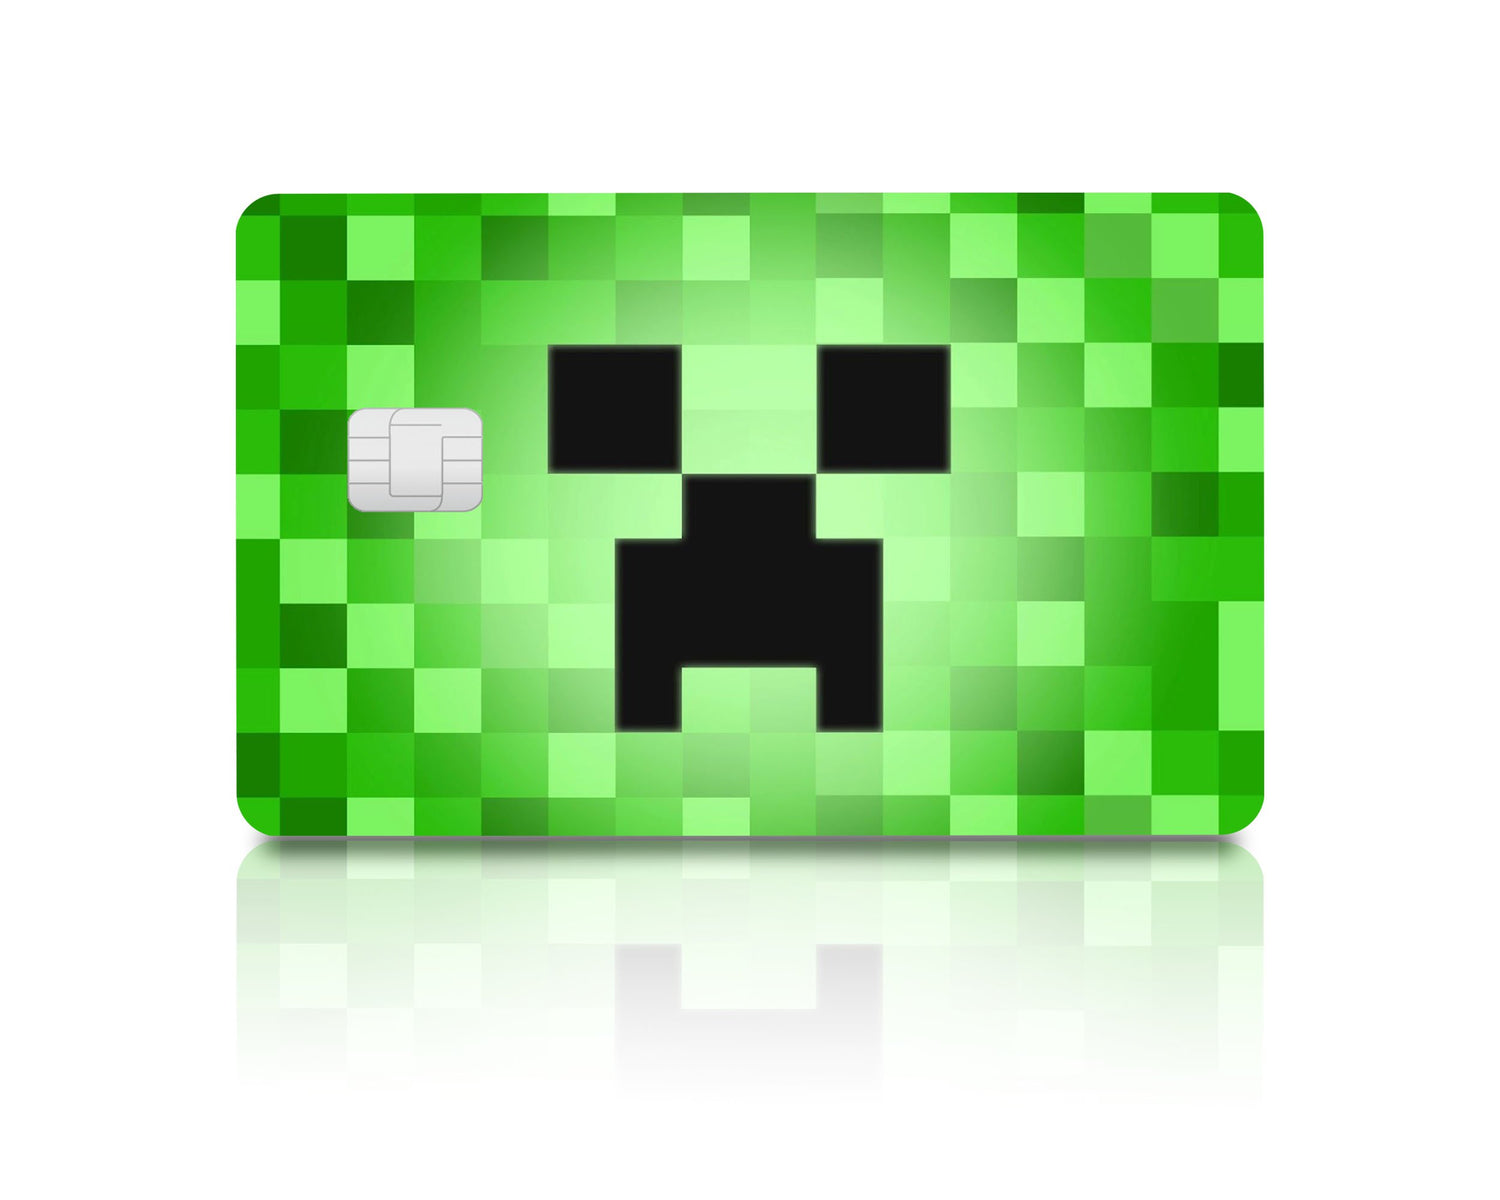 Flex Designs Credit Card Minecraft Creeper Full Skins - Gaming Minecraft & Debit Card Skin